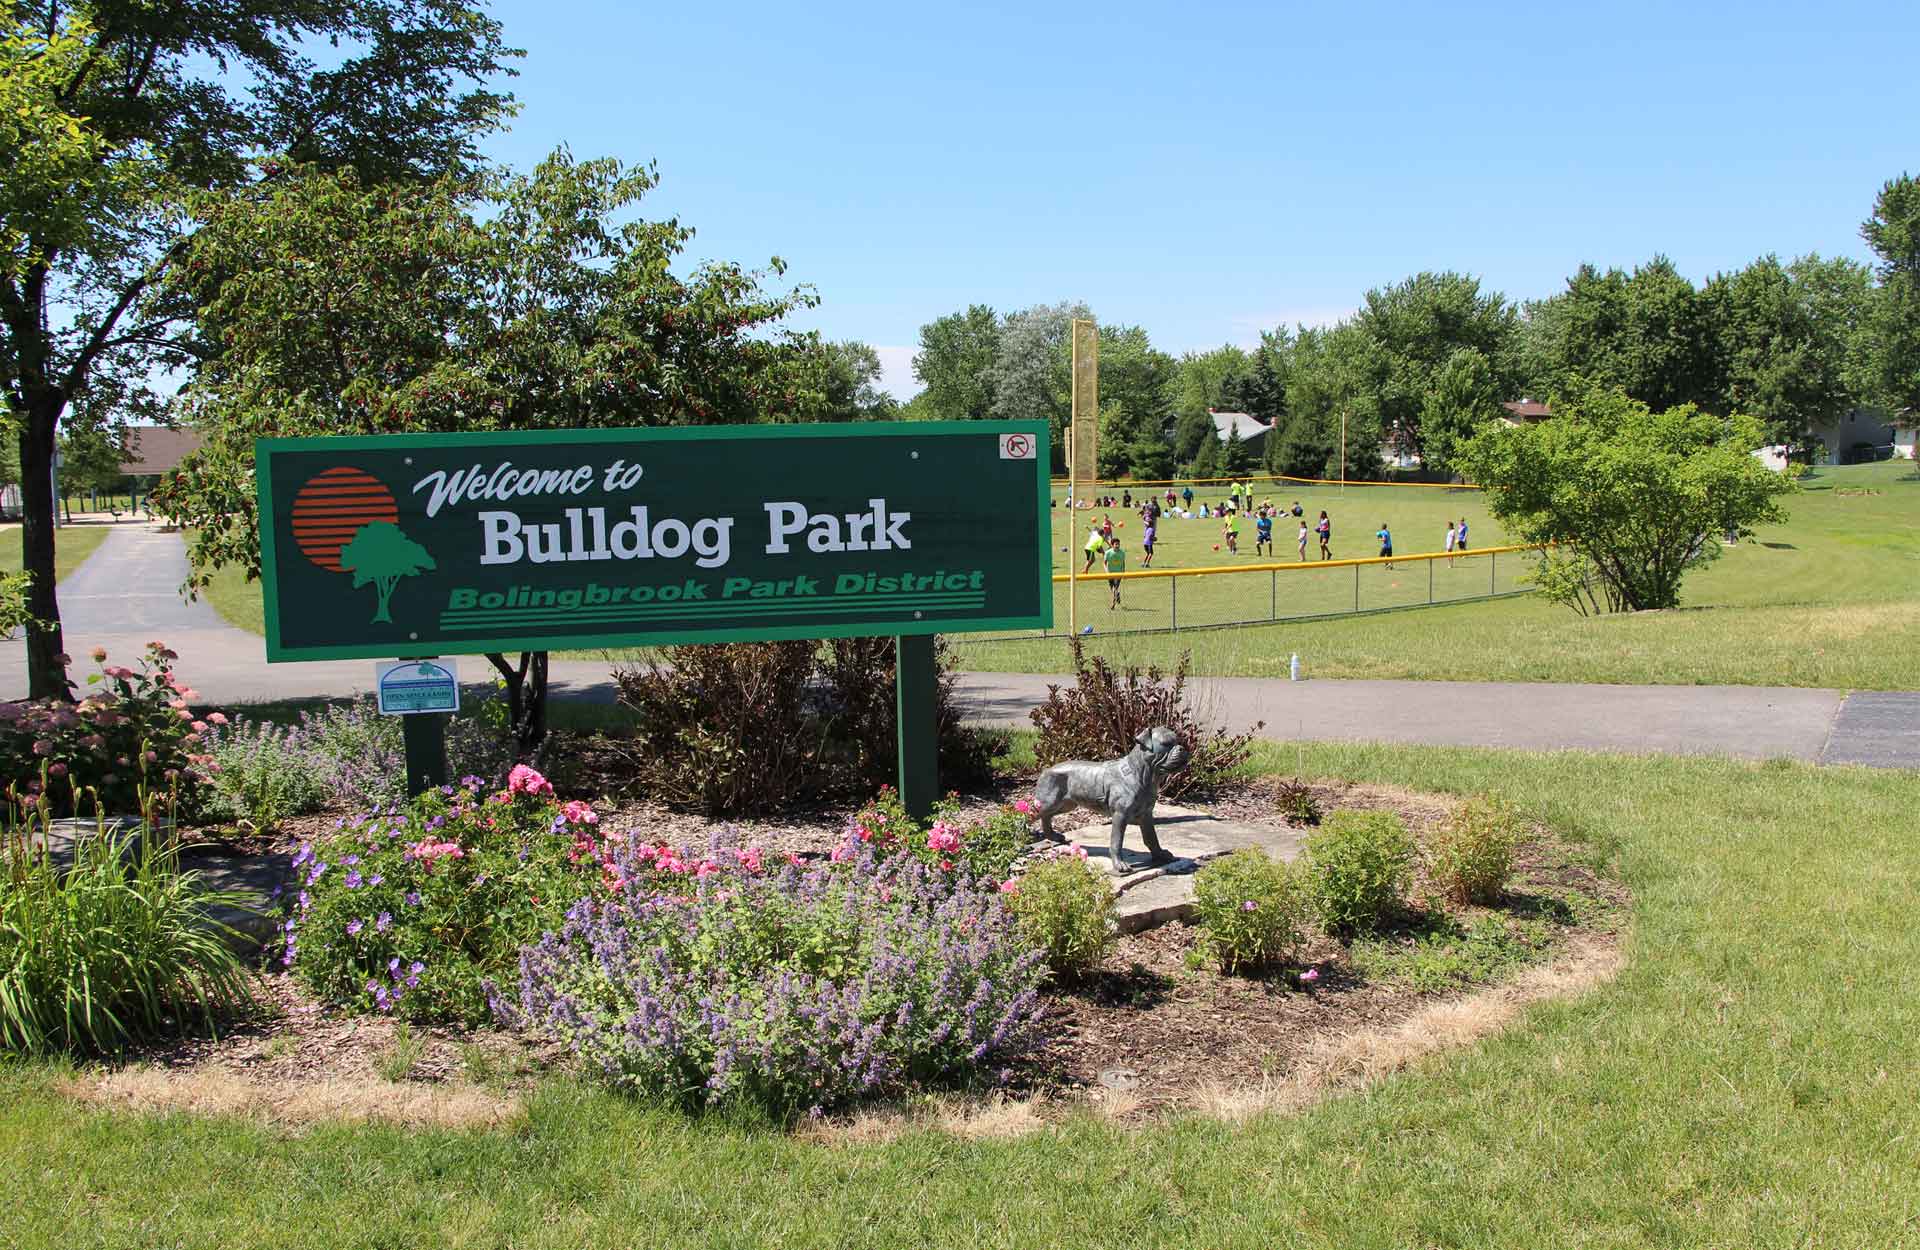 Bolingbrook Park District Bulldog Park